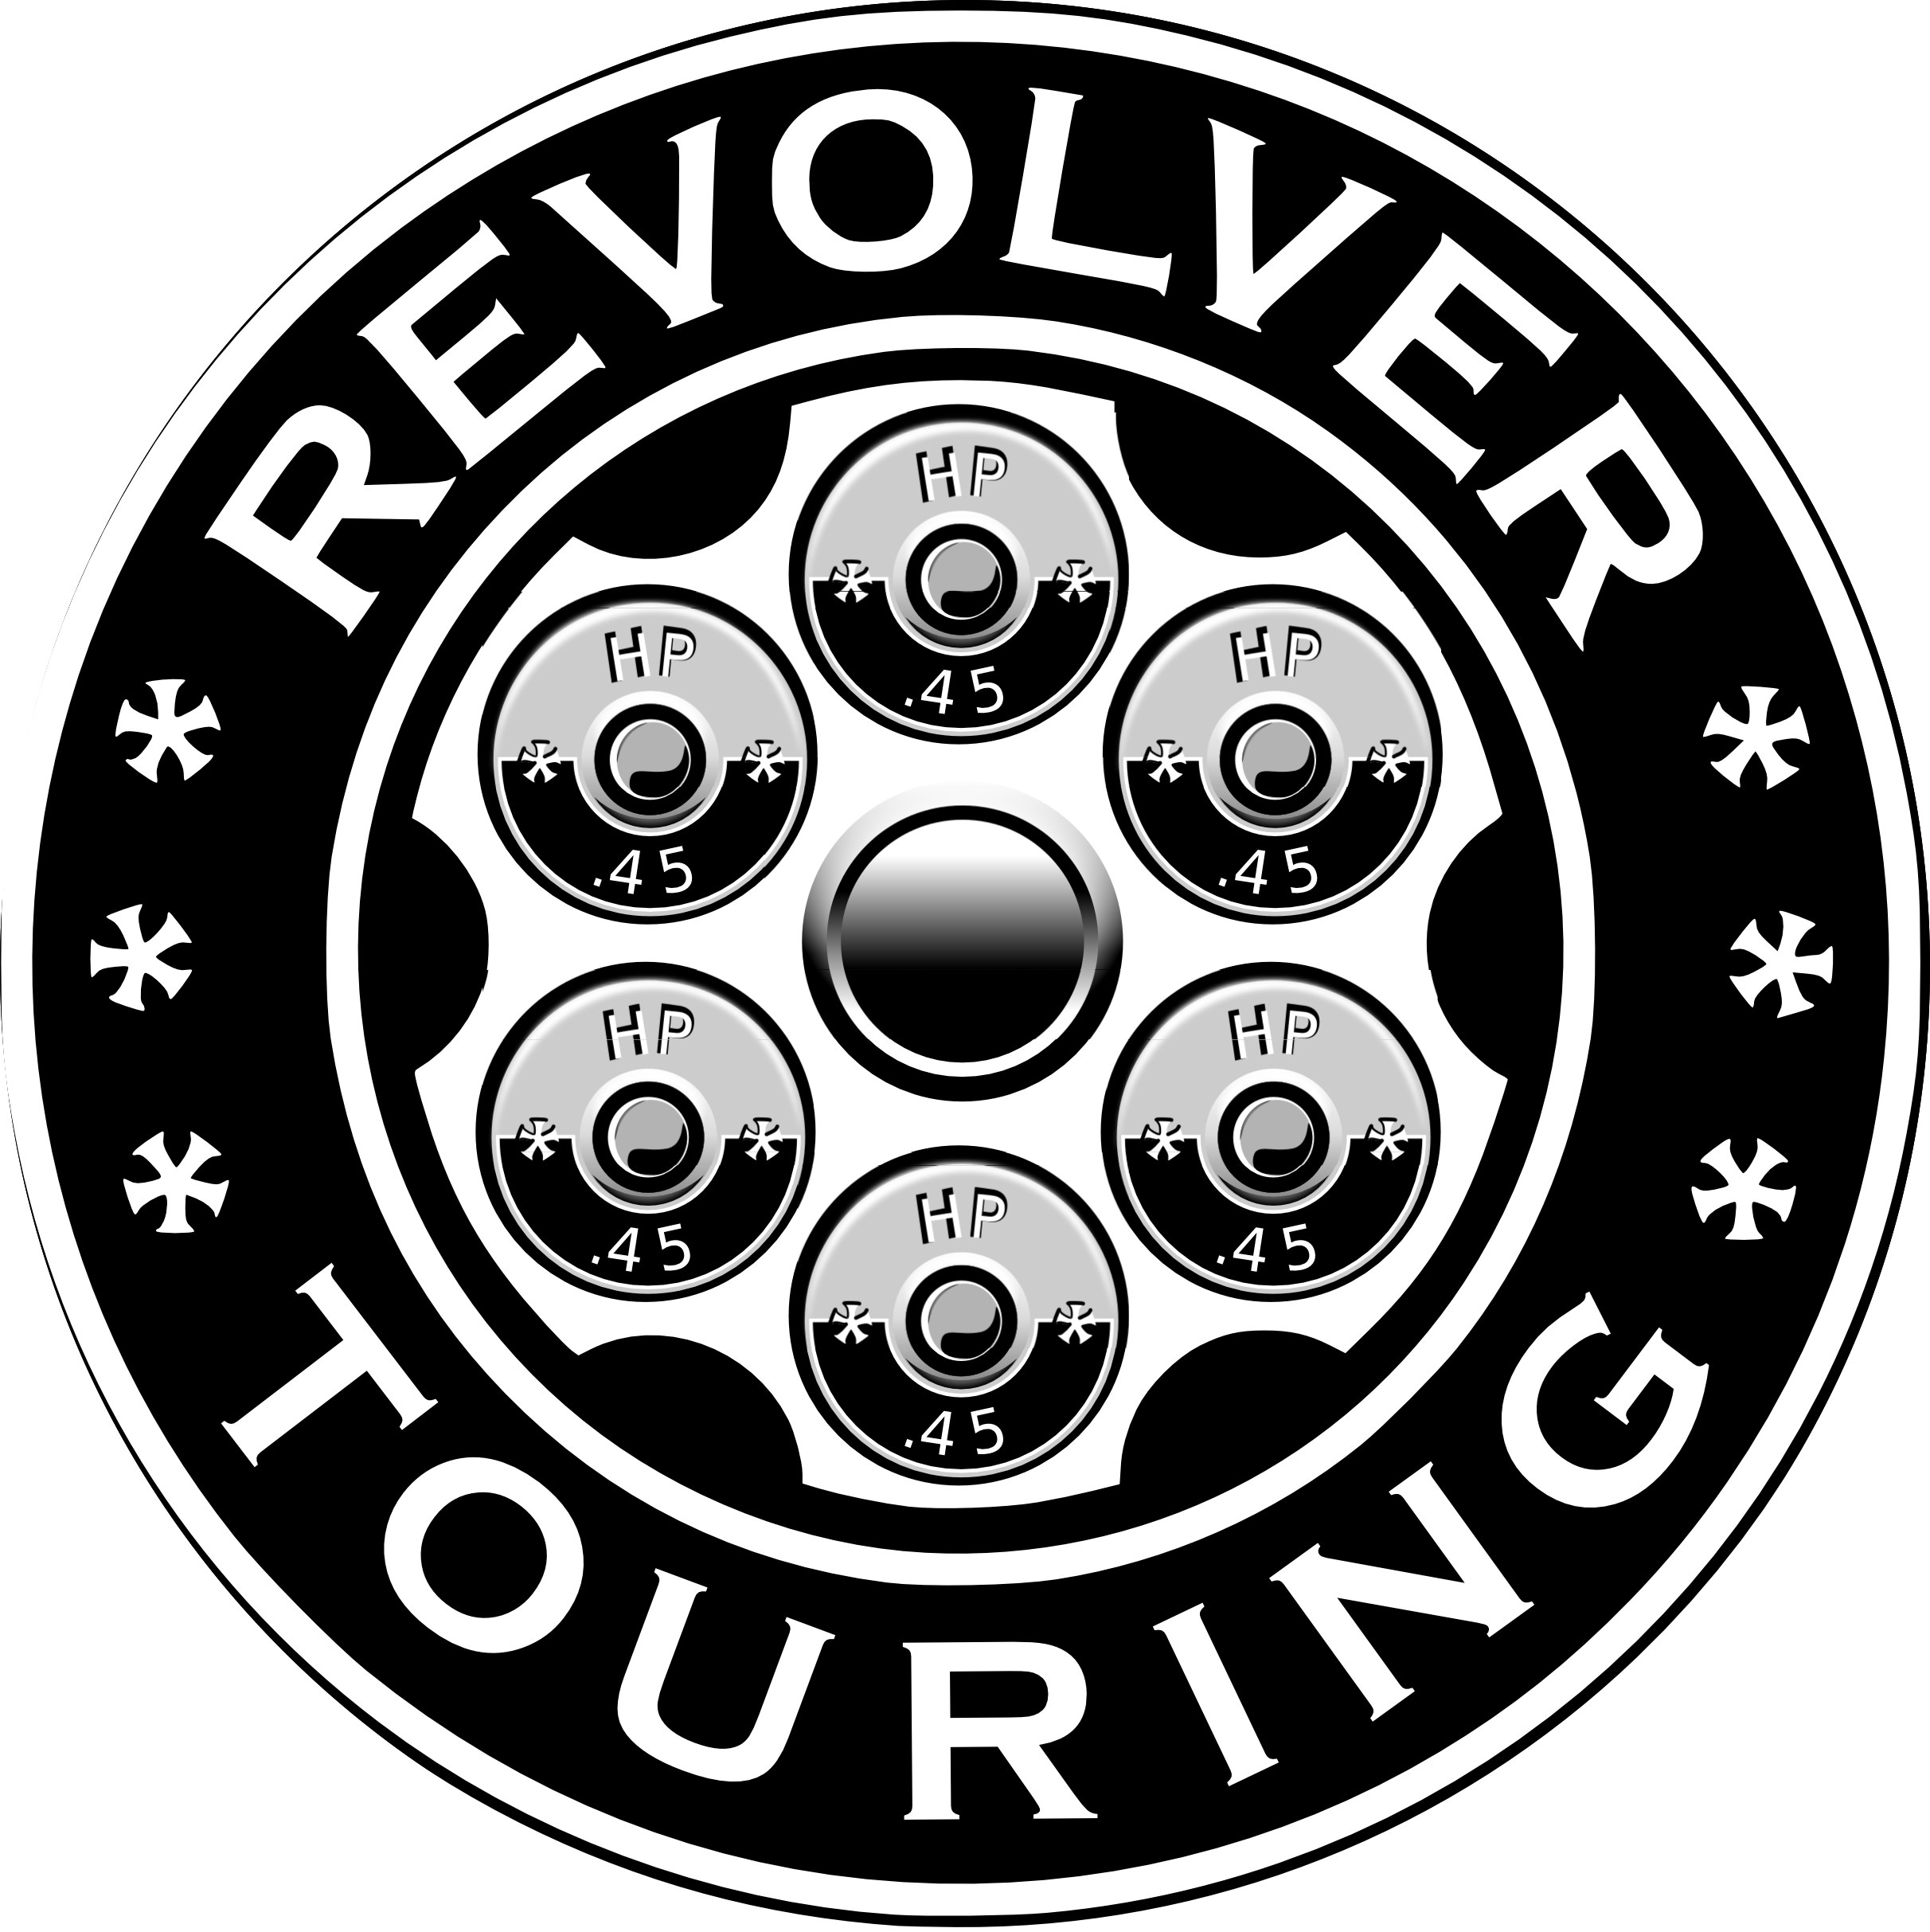 Revolver Touring